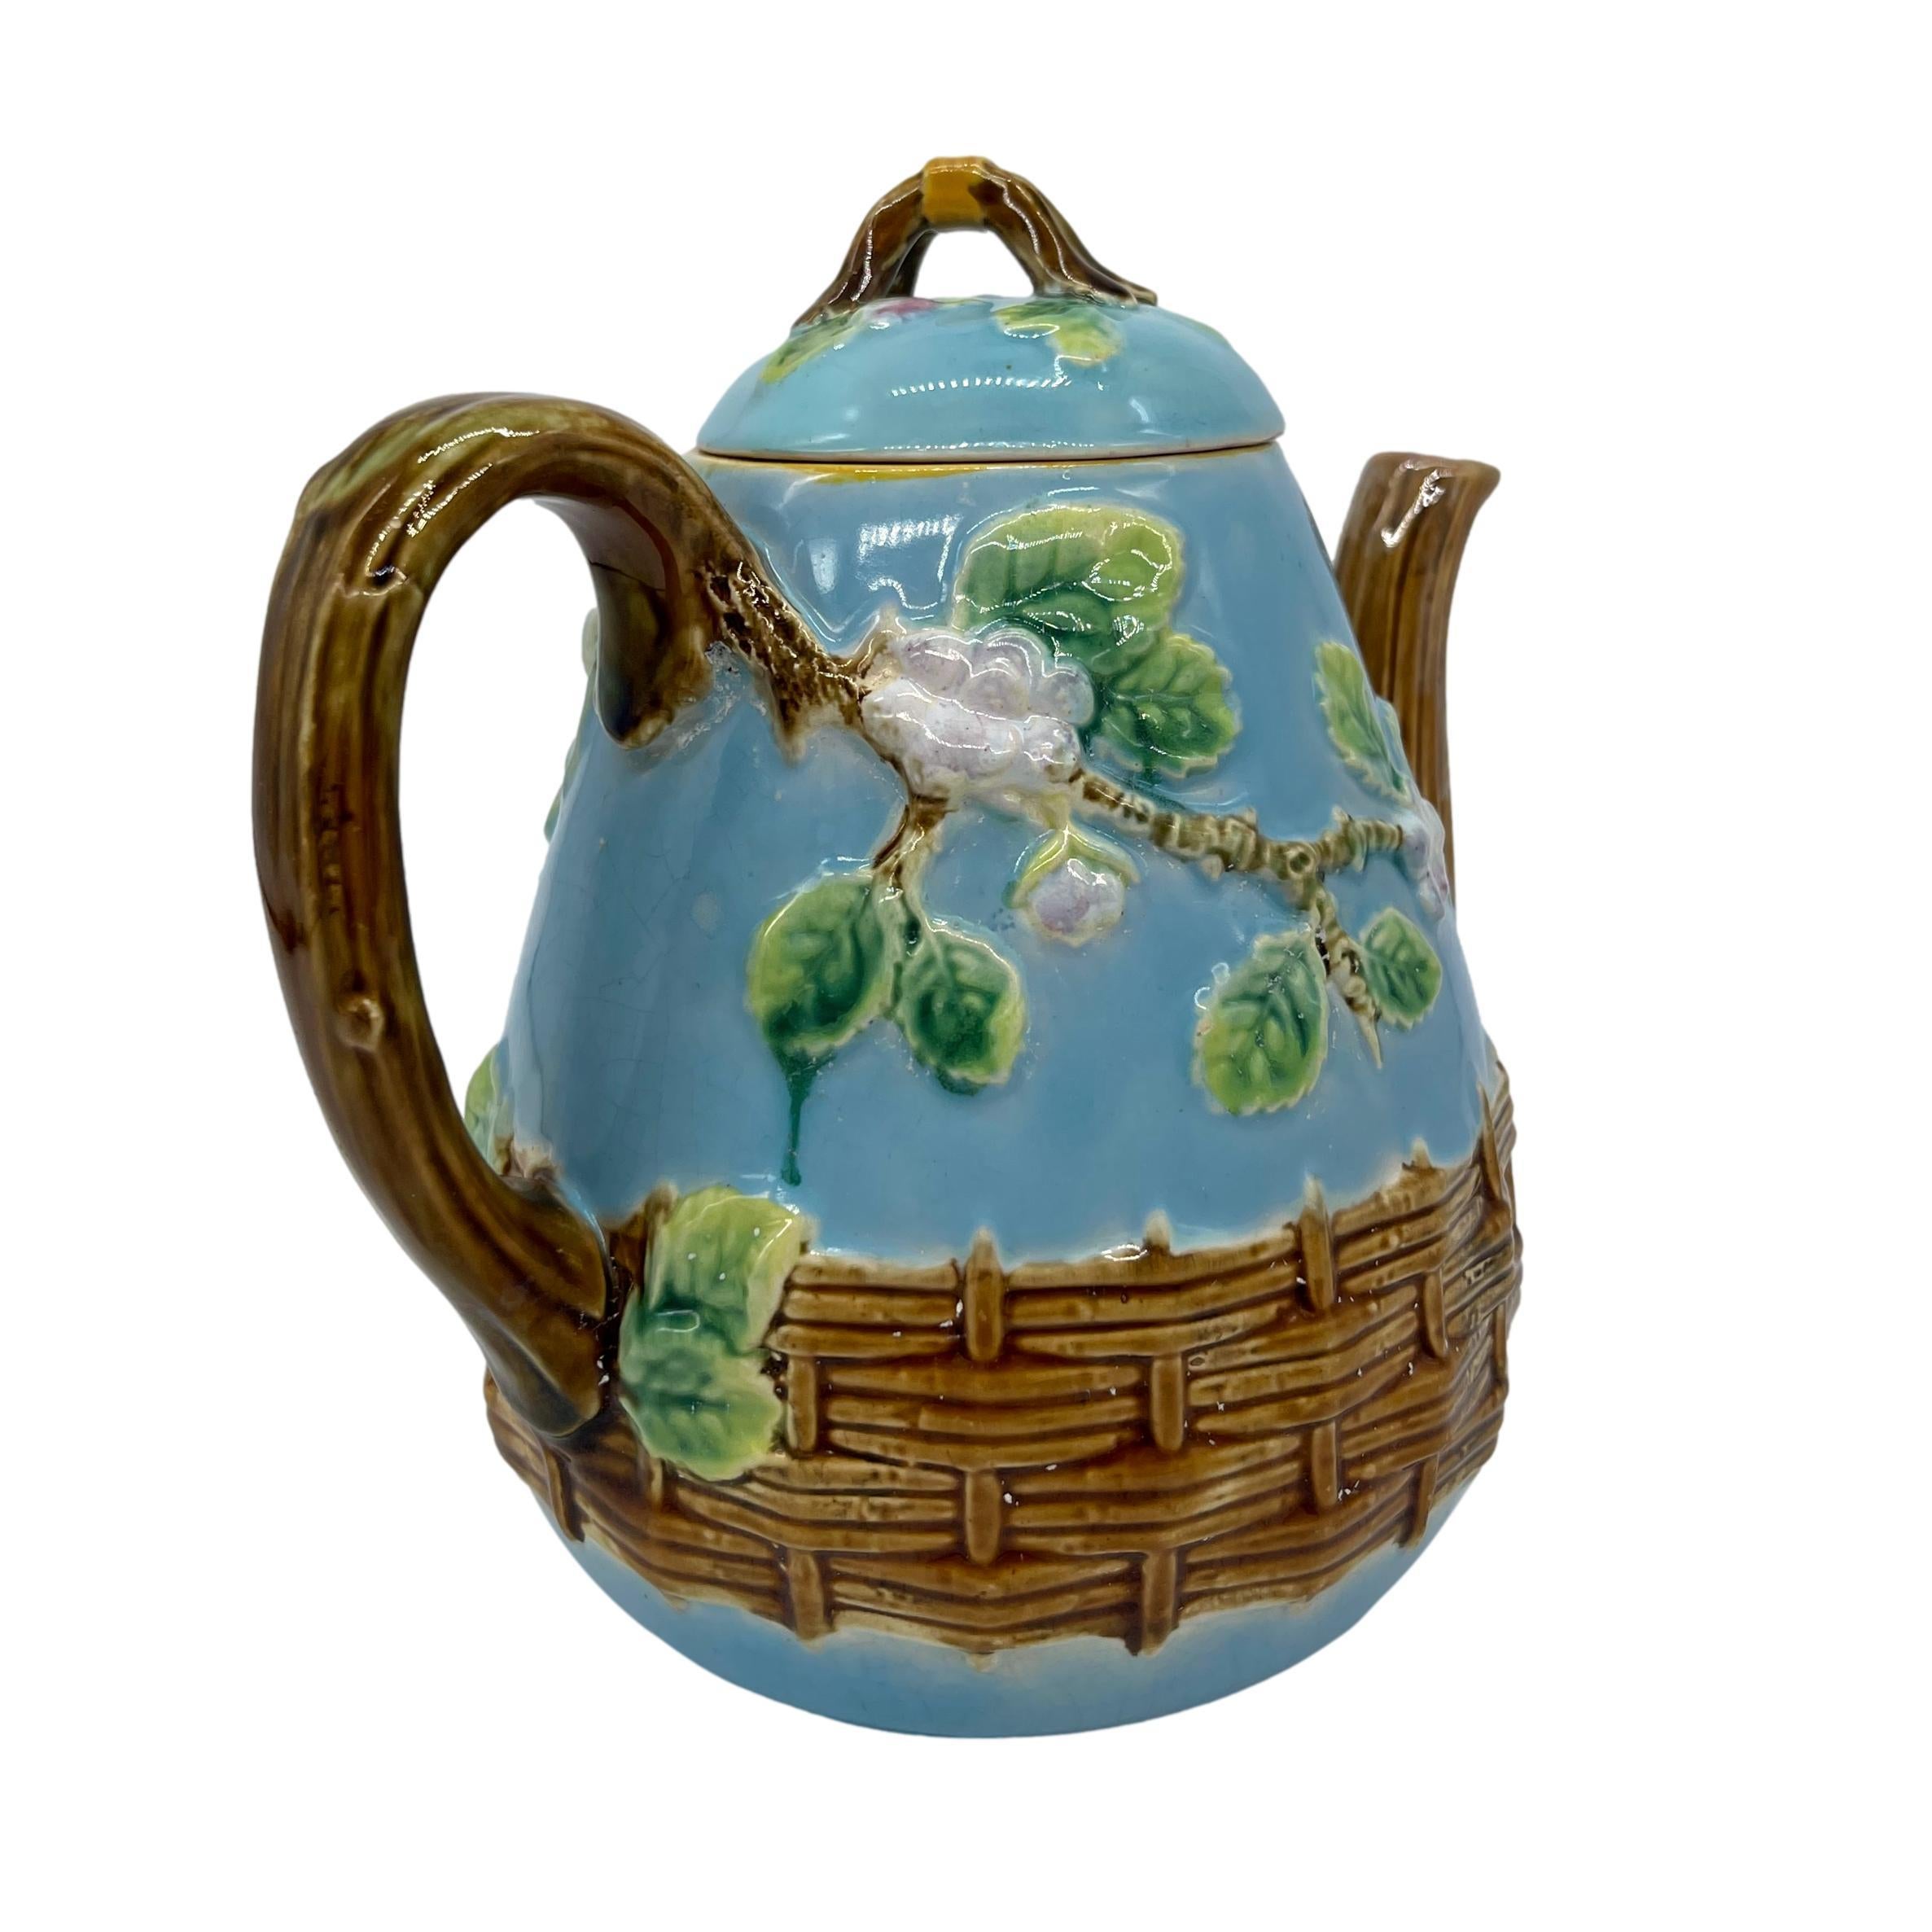 Molded George Jones Majolica 'Apple Blossom' Teapot Basketweave on Turquoise, ca. 1873 For Sale